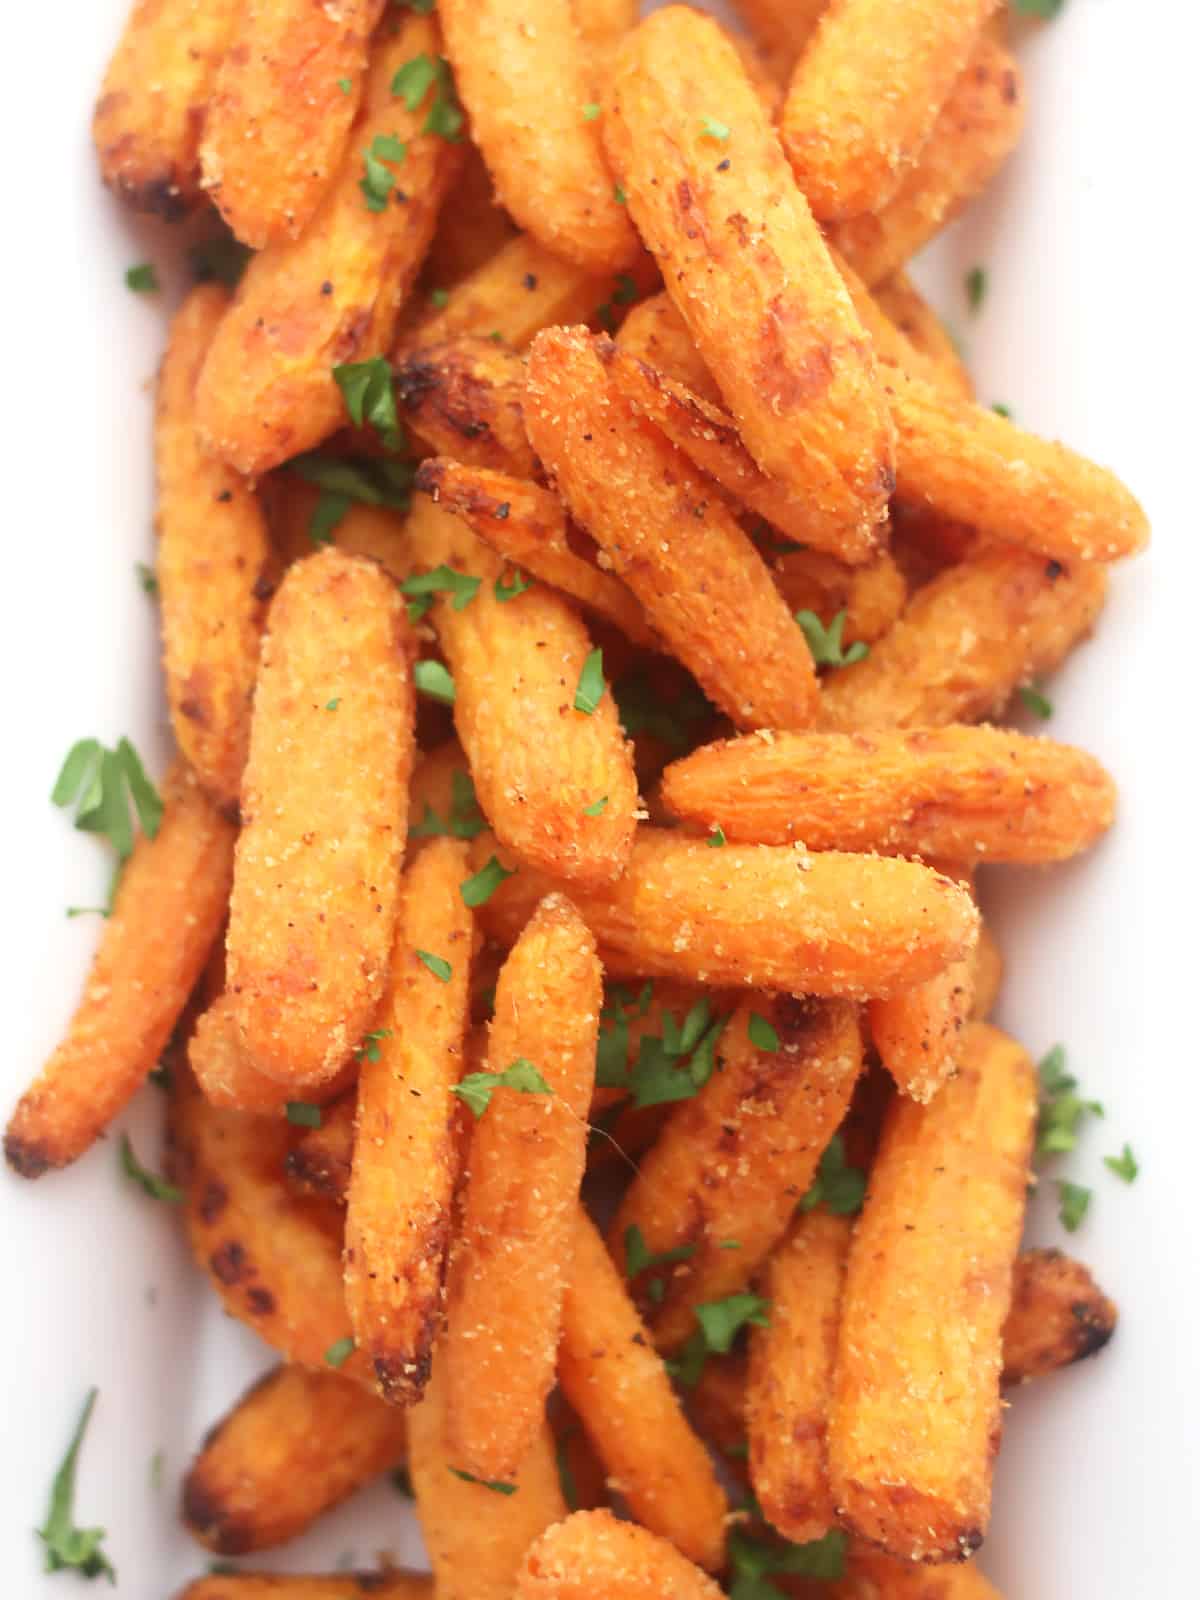 Close up of seasoned air fried carrots.